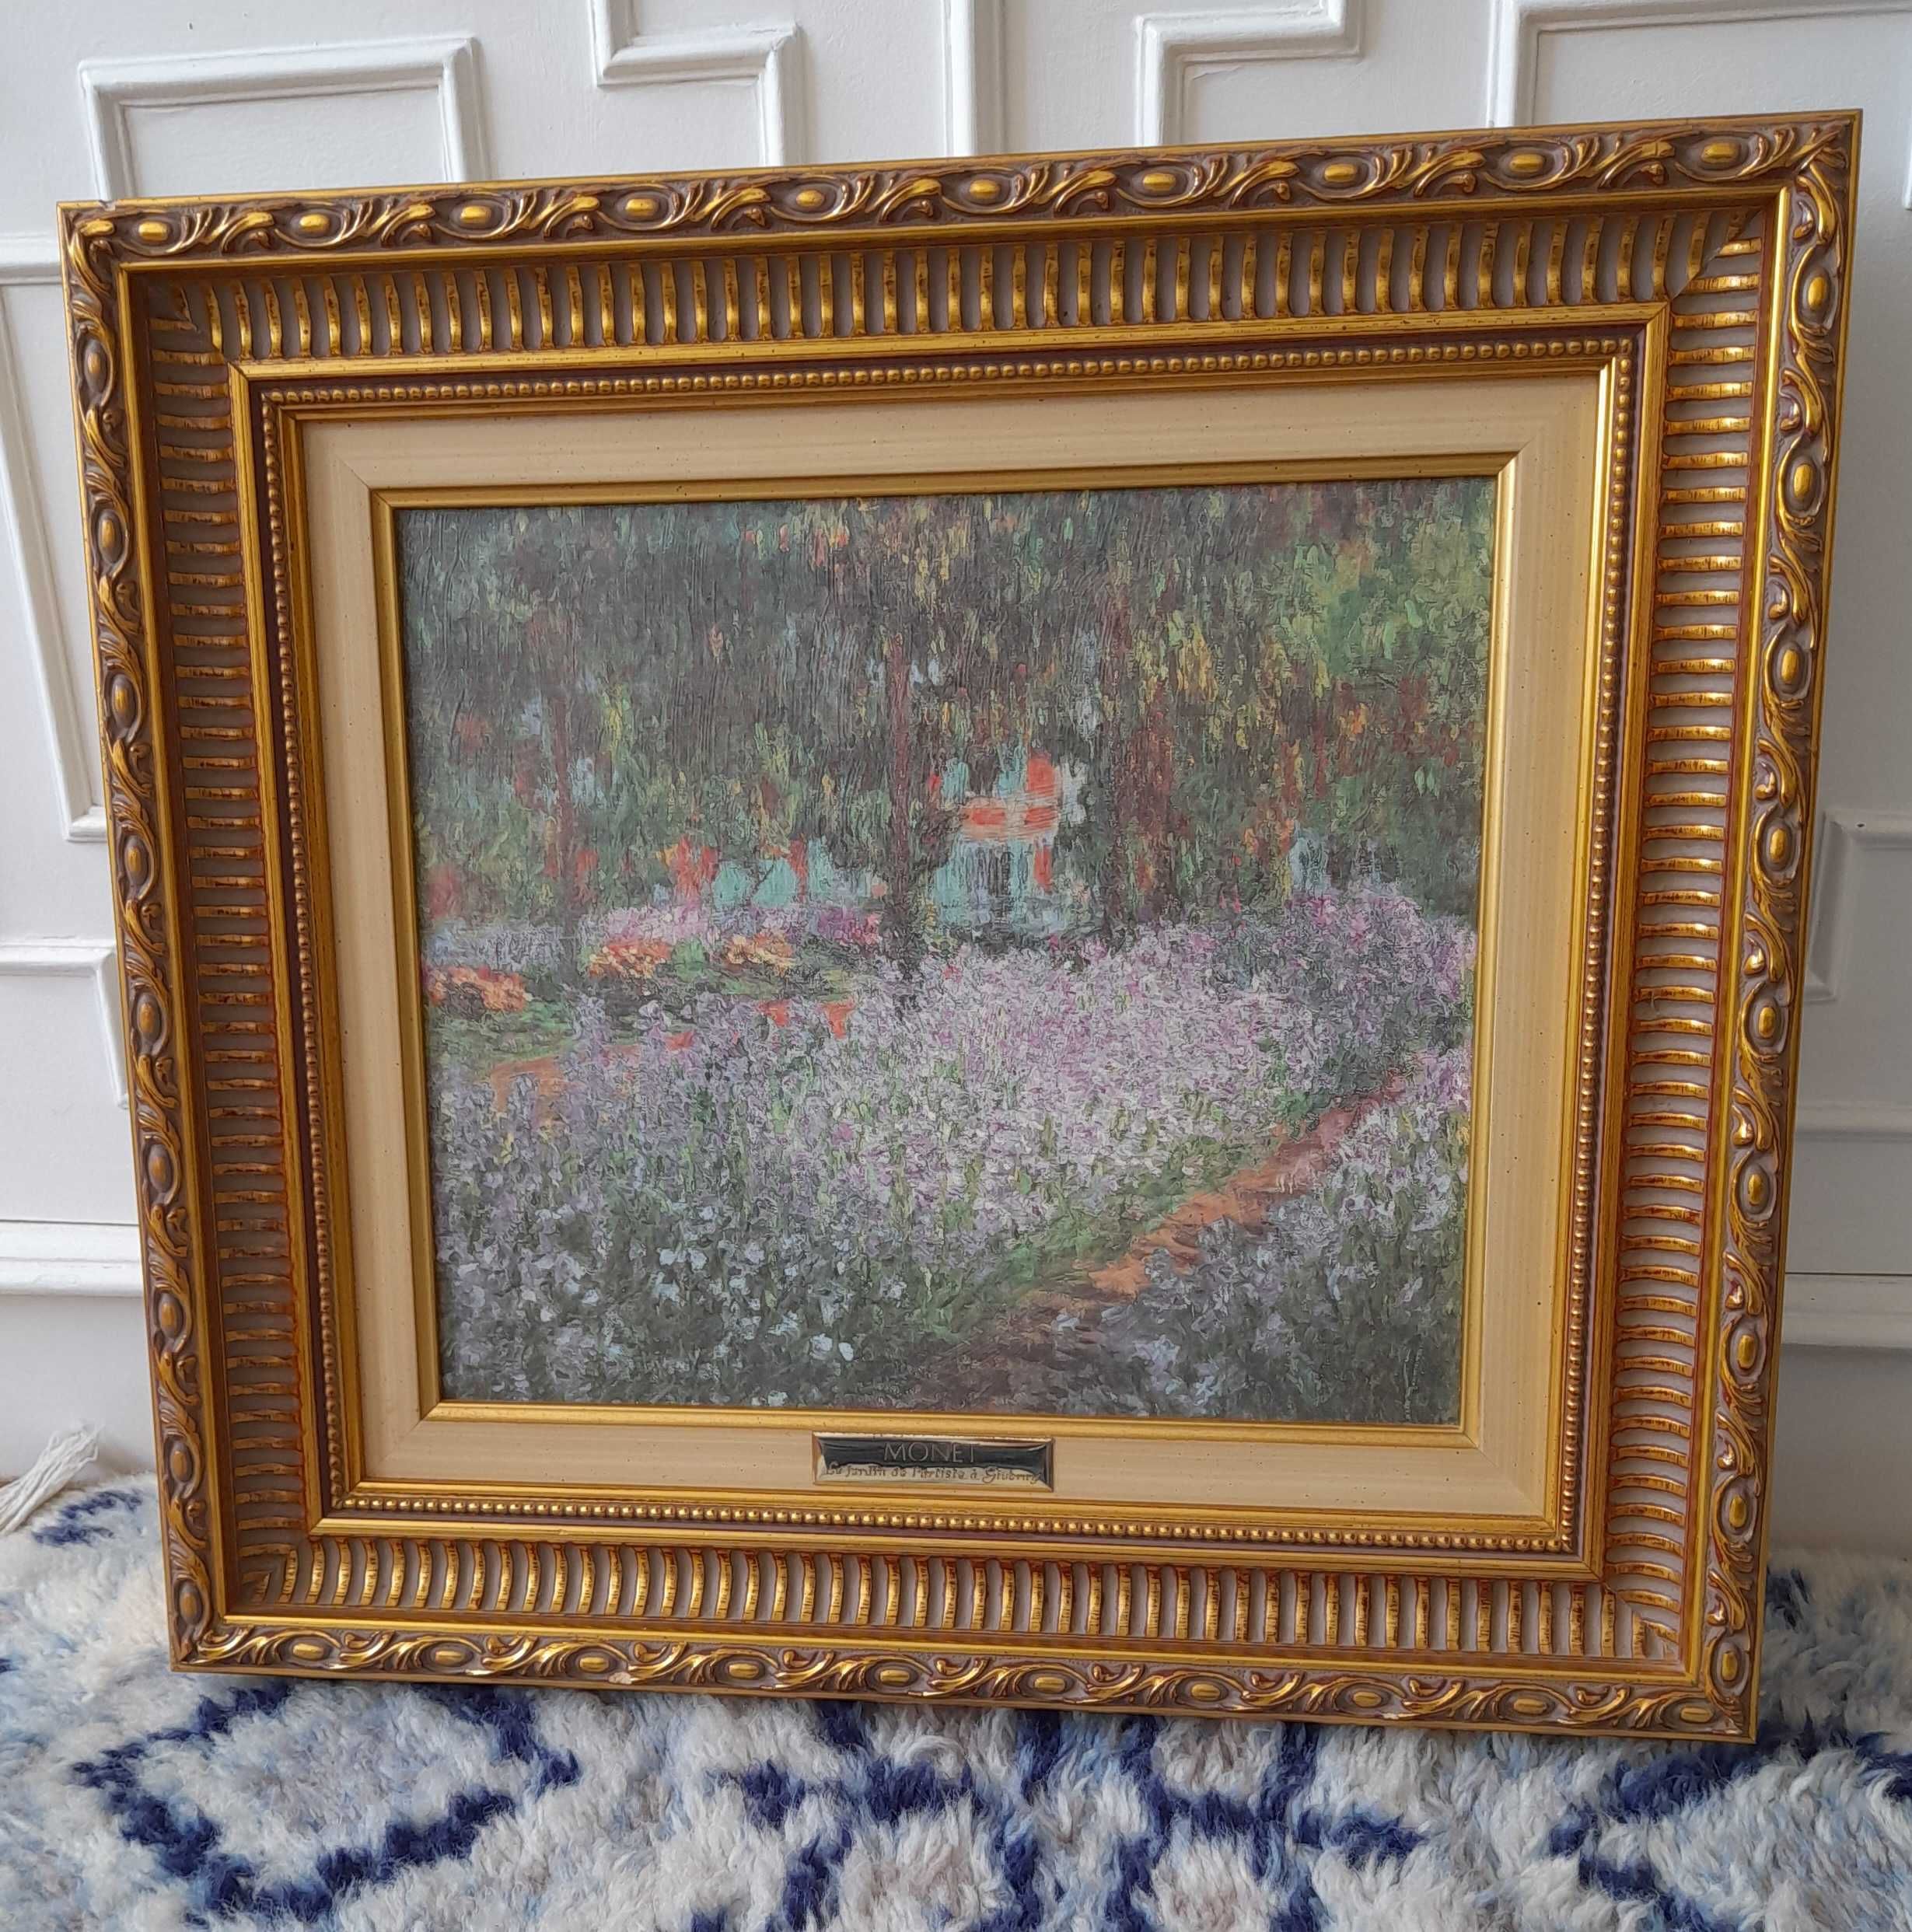 Colecao de quadros  Impressionismo Claude Monet
 ART GALLERY